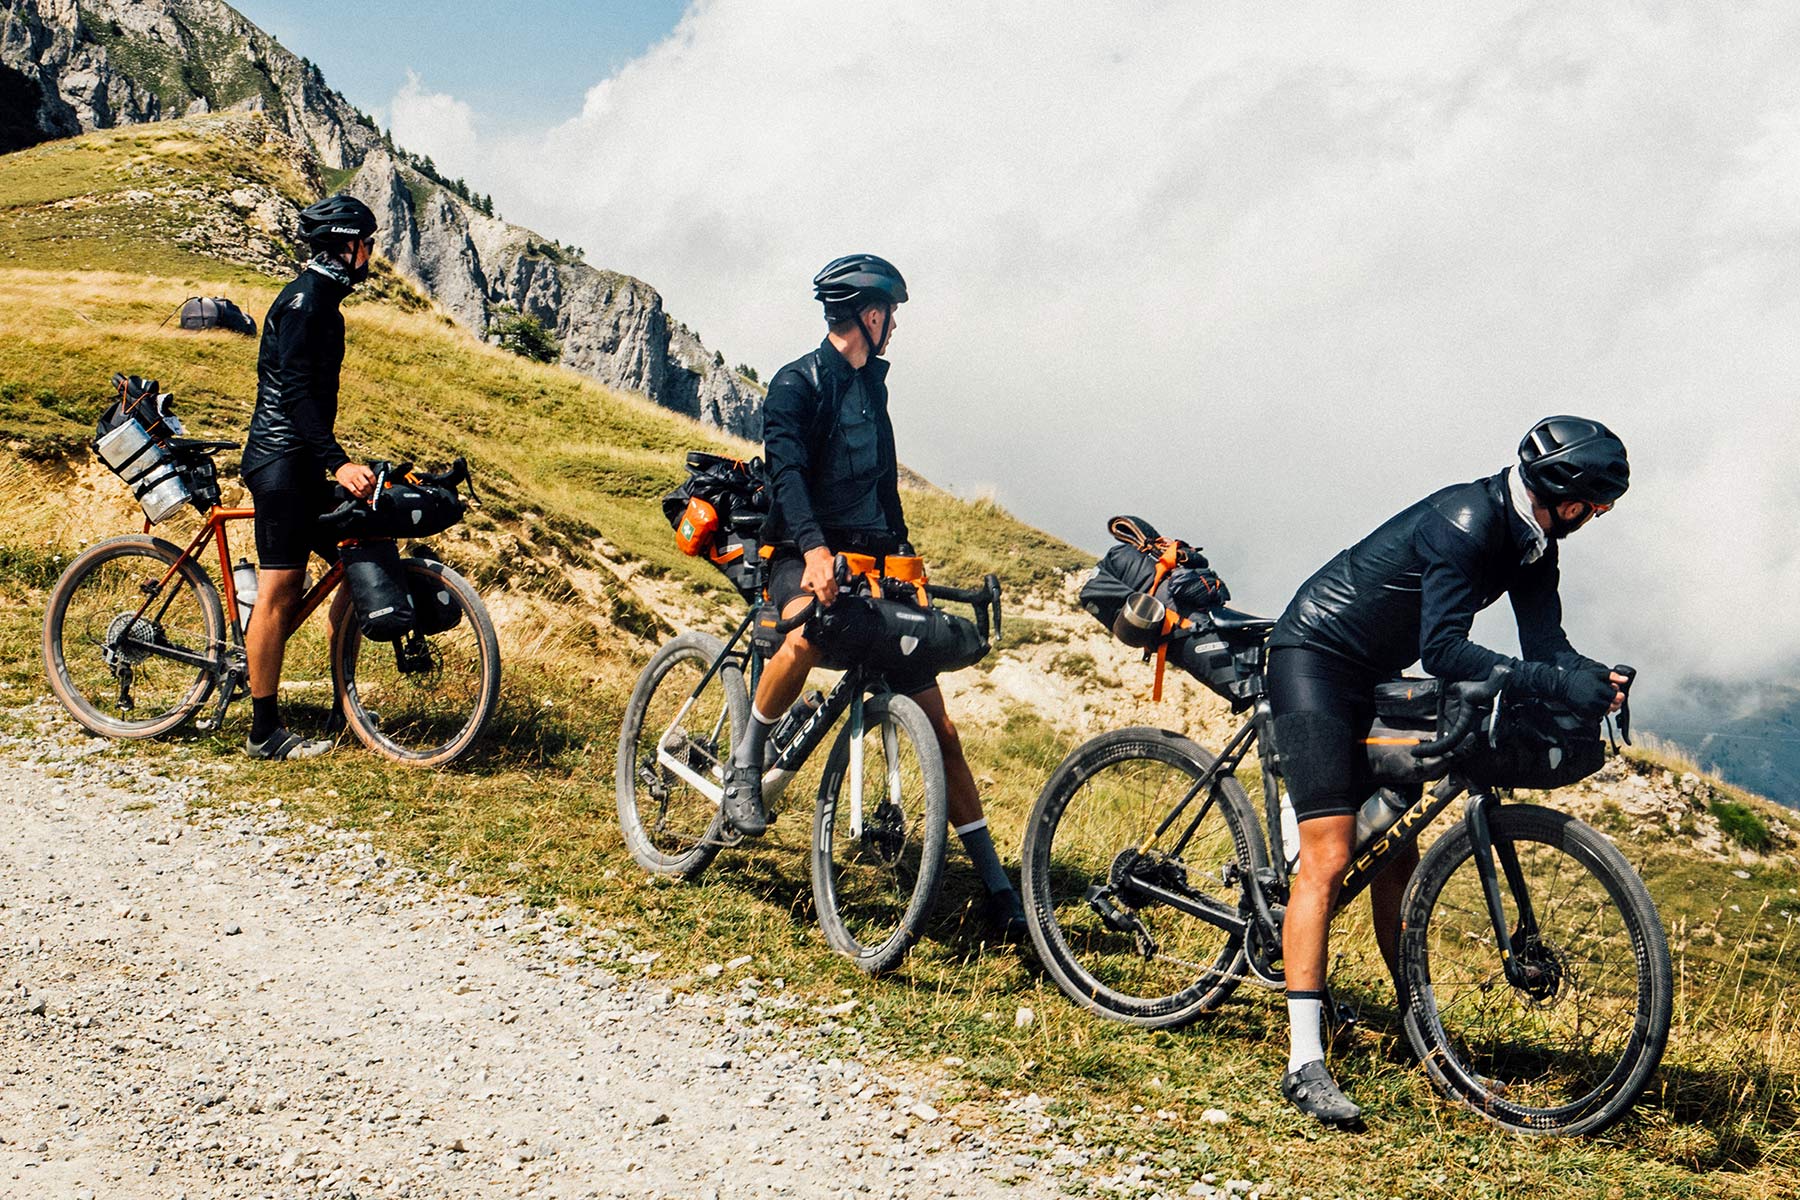 Festka Scout custom carbon adventure gravel bike, Dolomites bikepacking